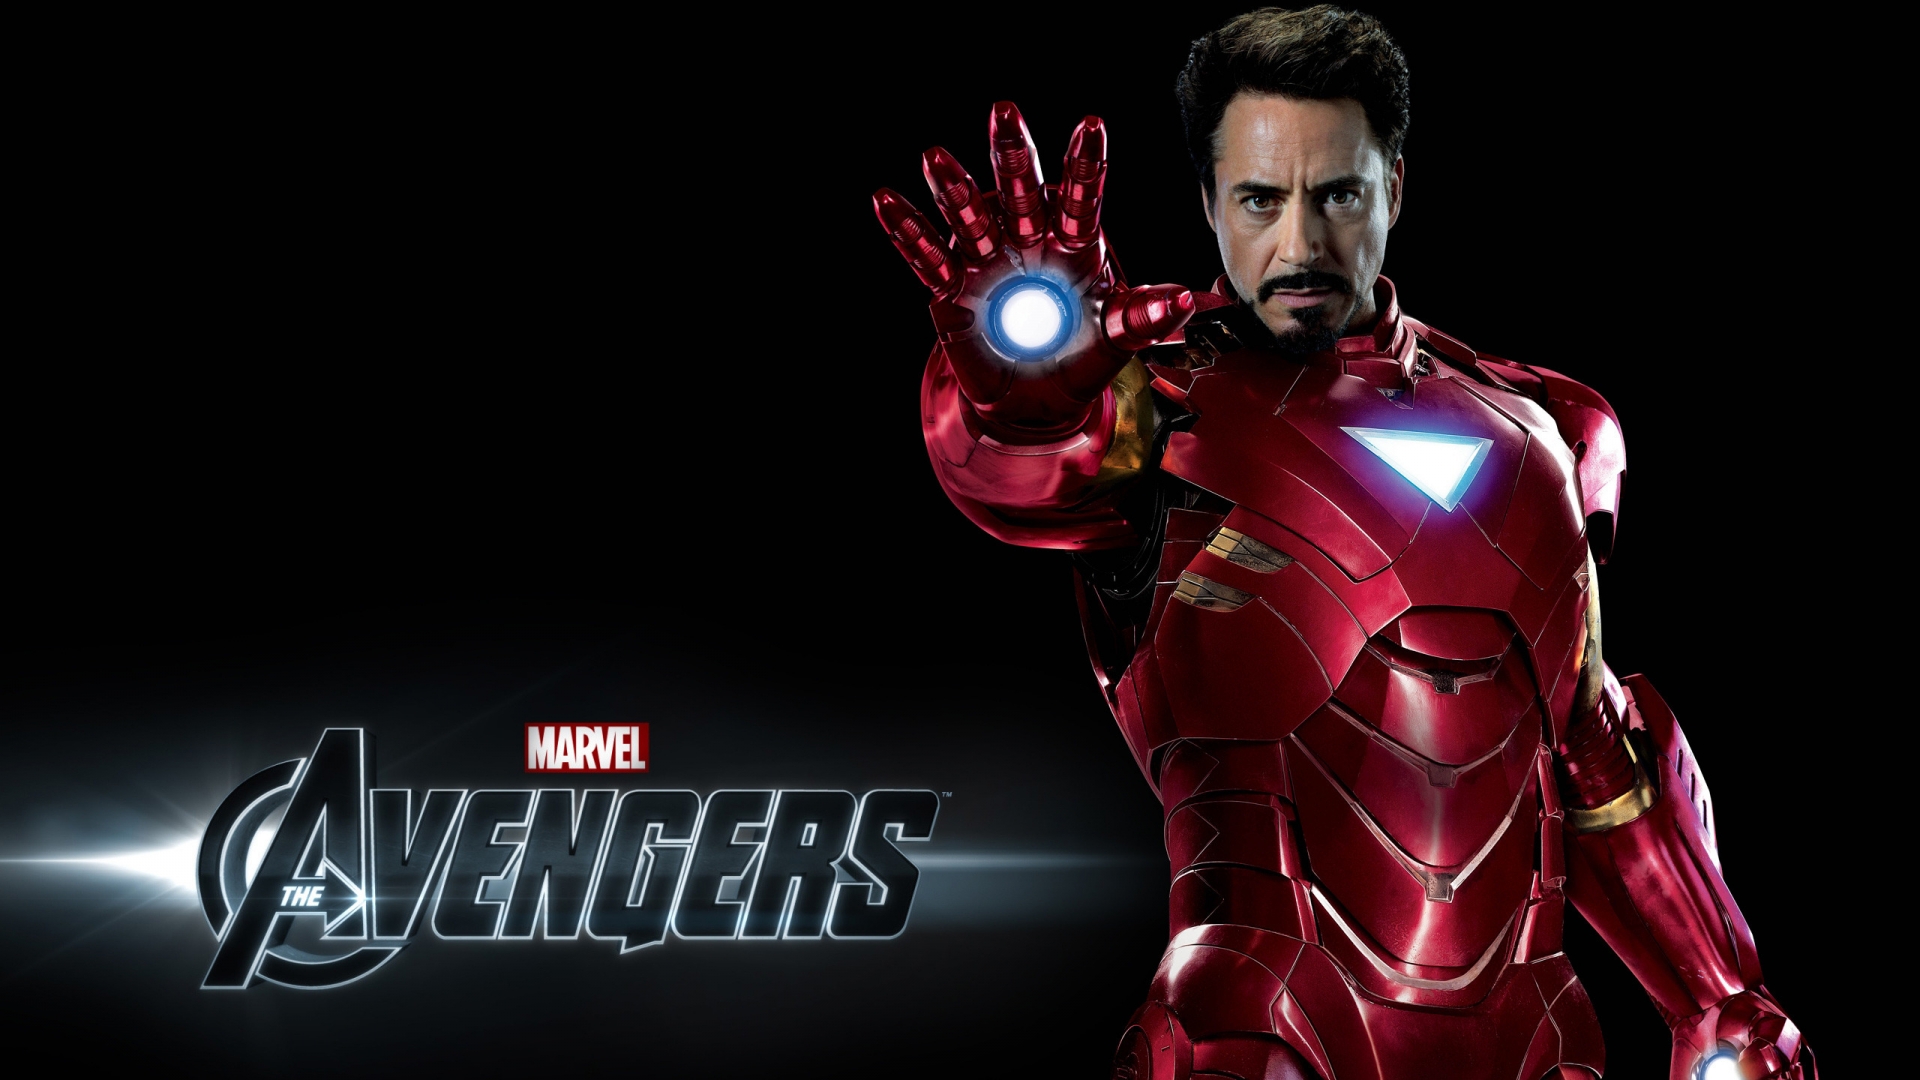 Avengers Iron Man for 1920 x 1080 HDTV 1080p resolution